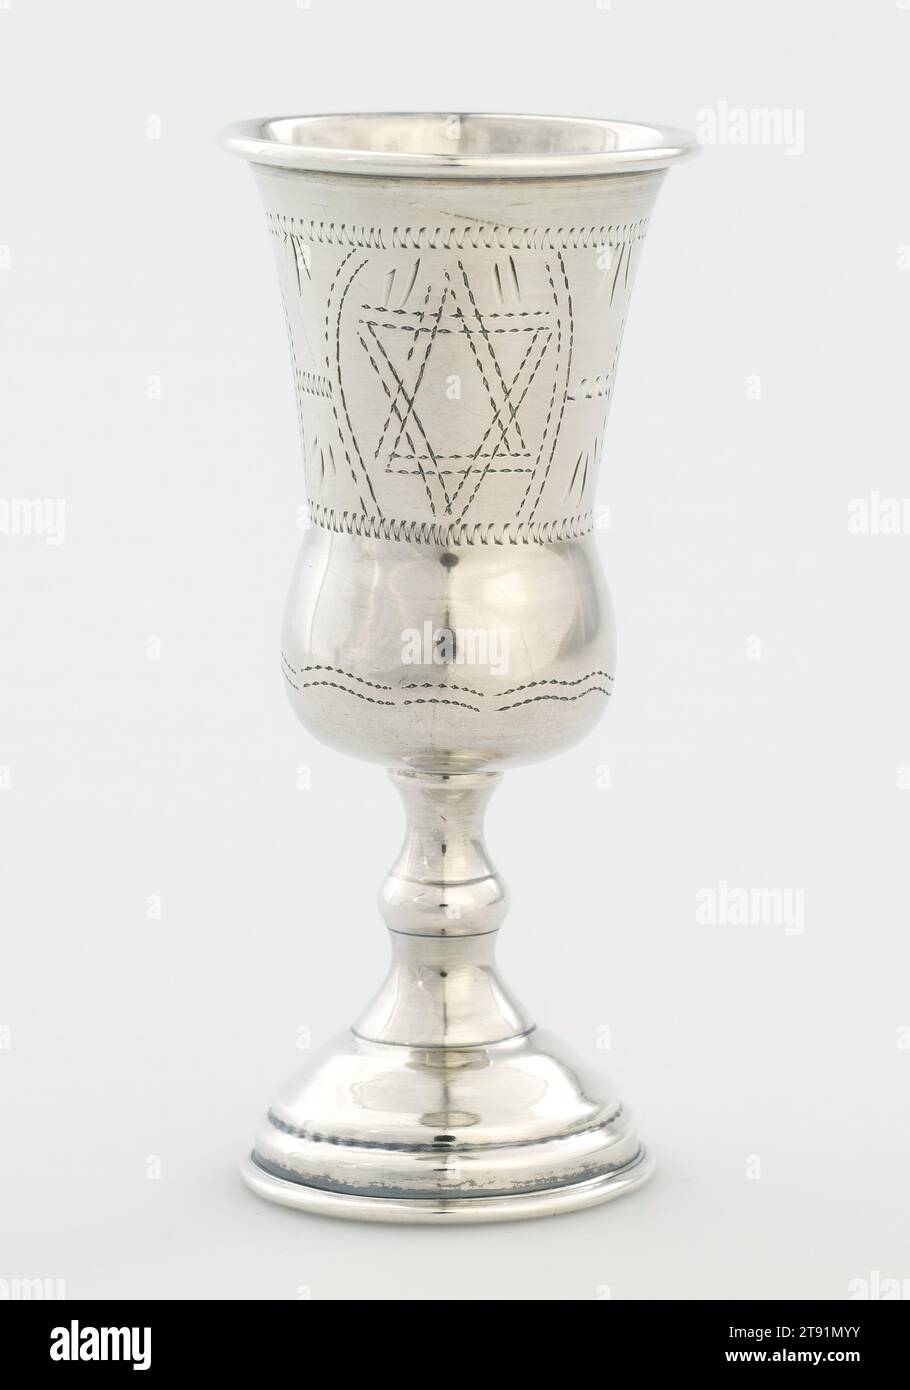 Kiddush (sanctification) cup, c. 1900, 4 1/8 x 1 13/16 x 1 13/16 in. (10.48 x 4.6 x 4.6 cm), Silver, Poland Stock Photo